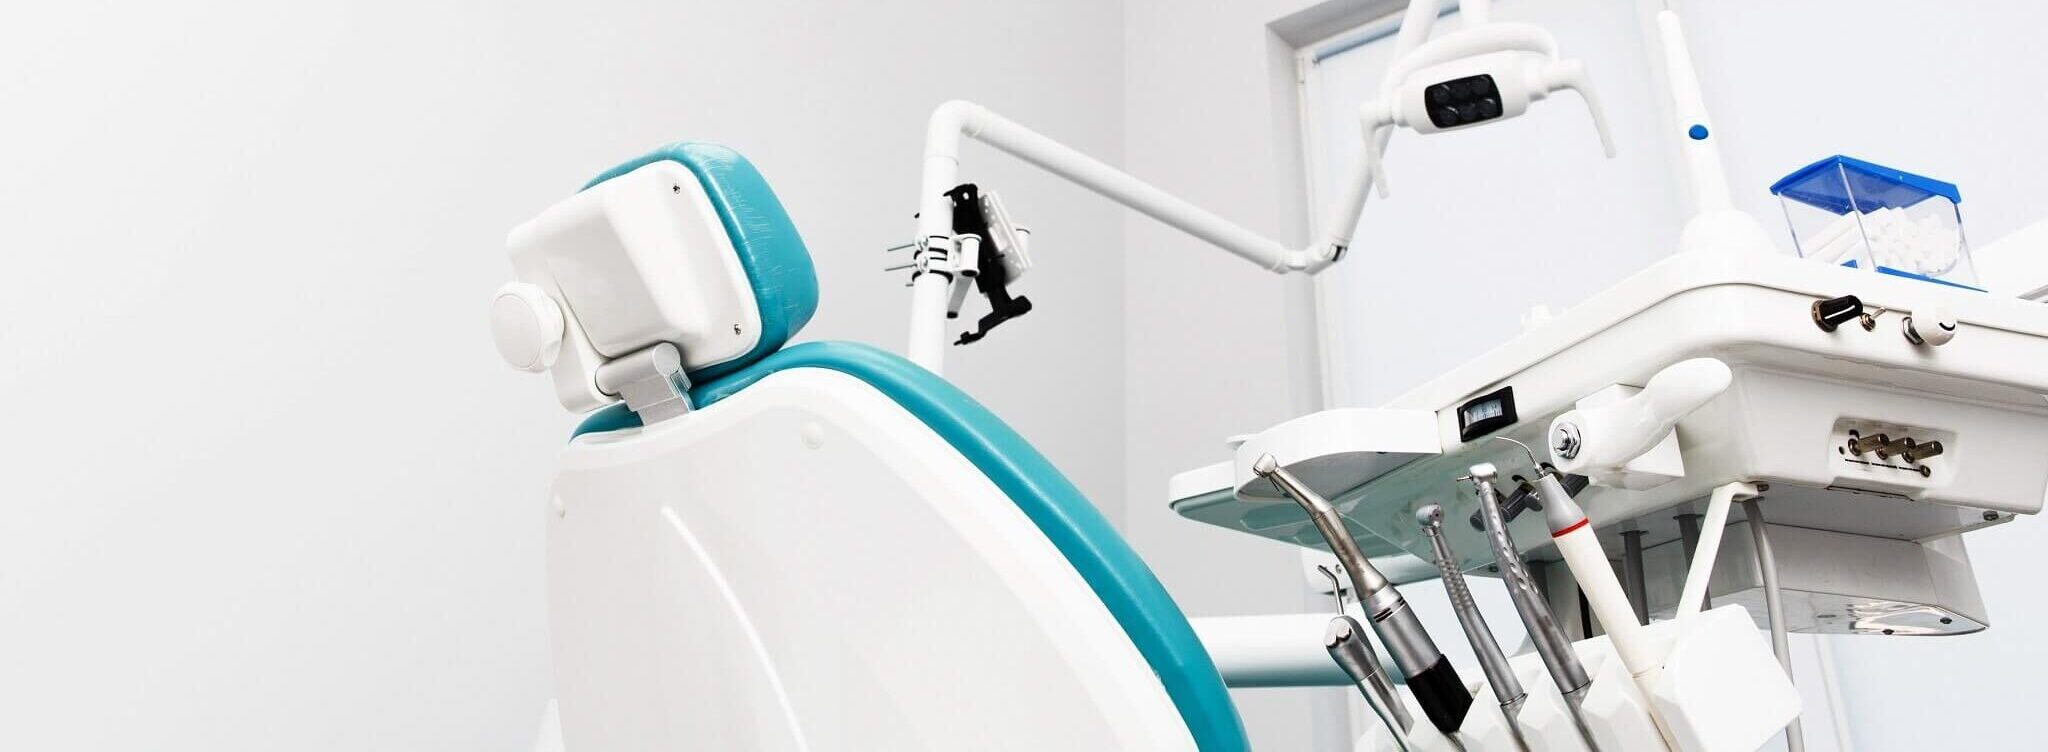 equipment-dental-instruments-dentist-s-office-tools-close-up